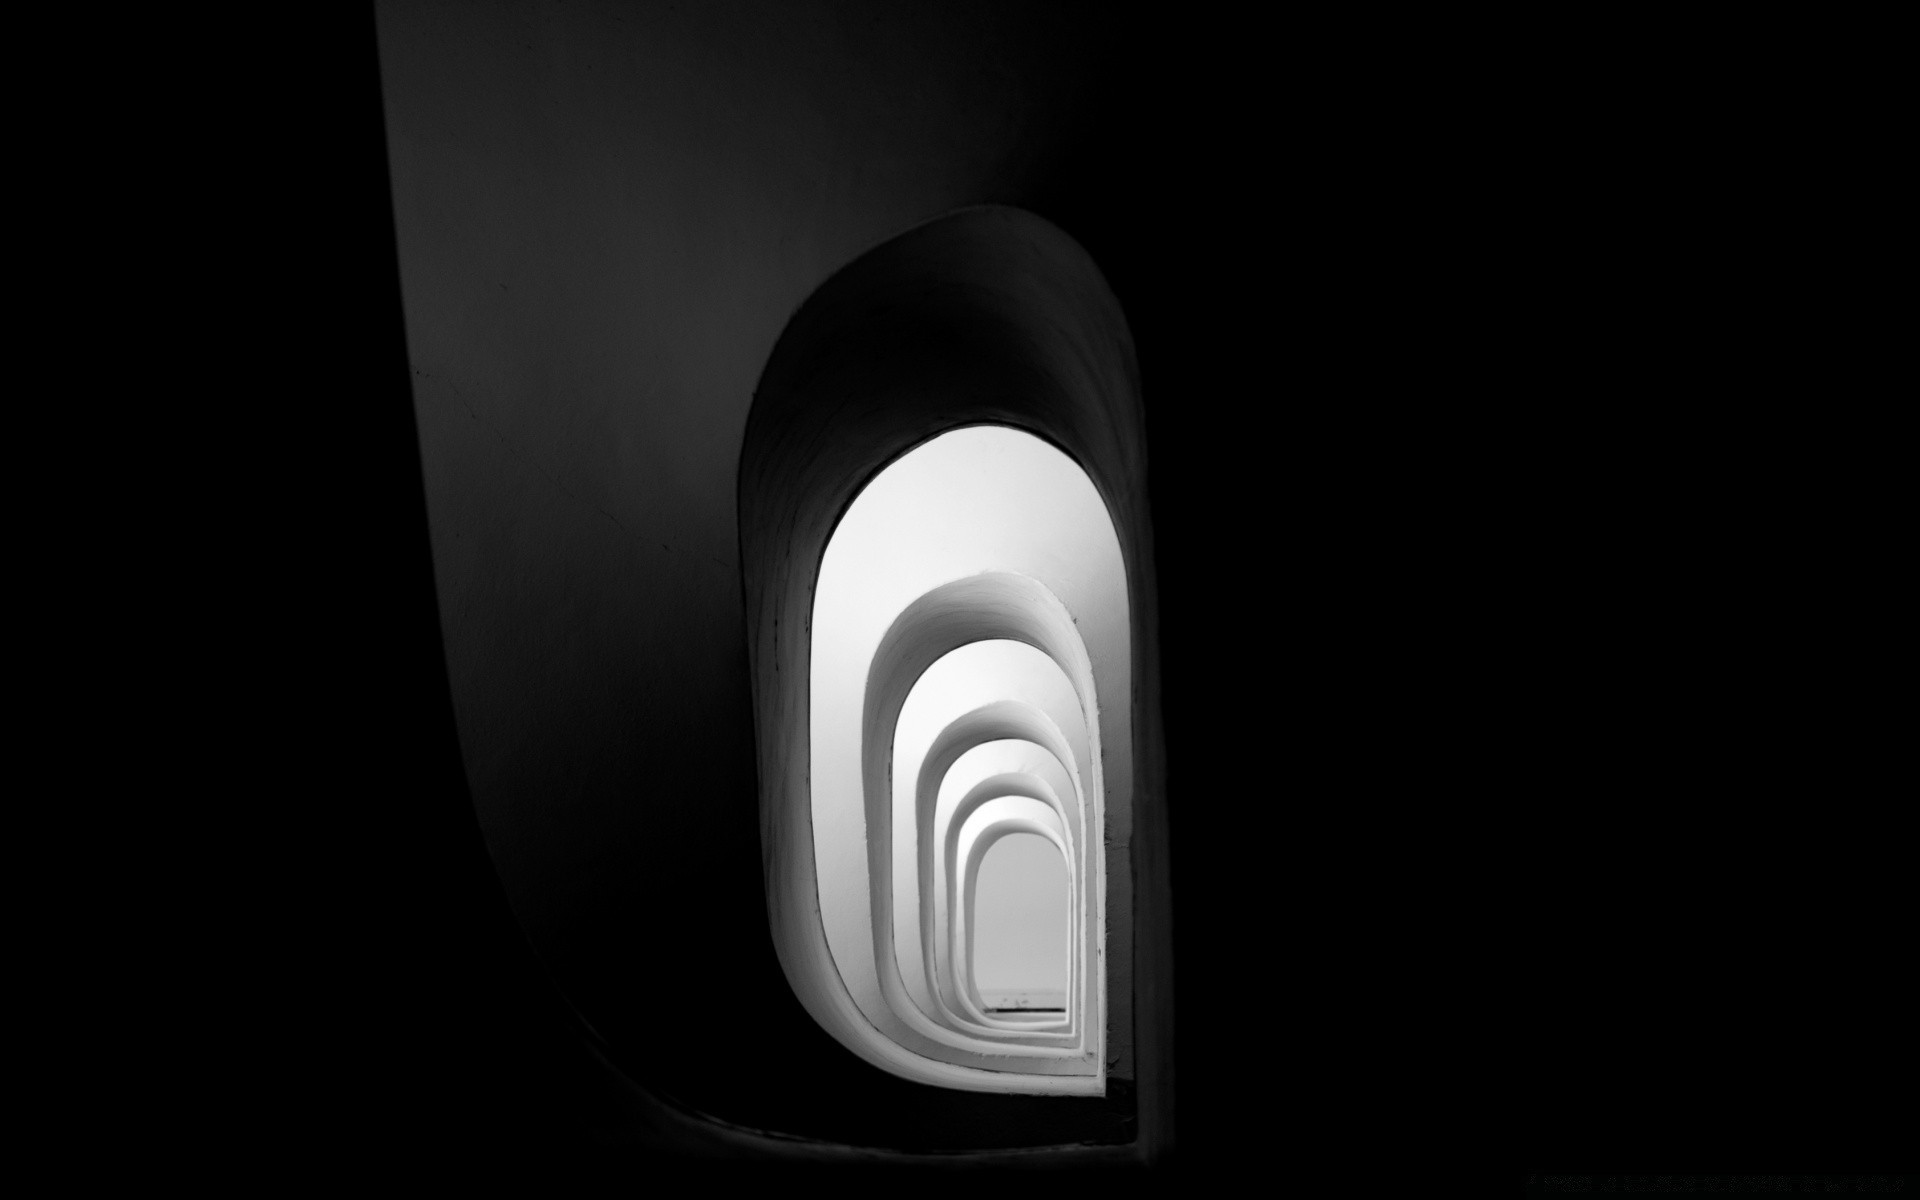 Black and white through door design wallpaper